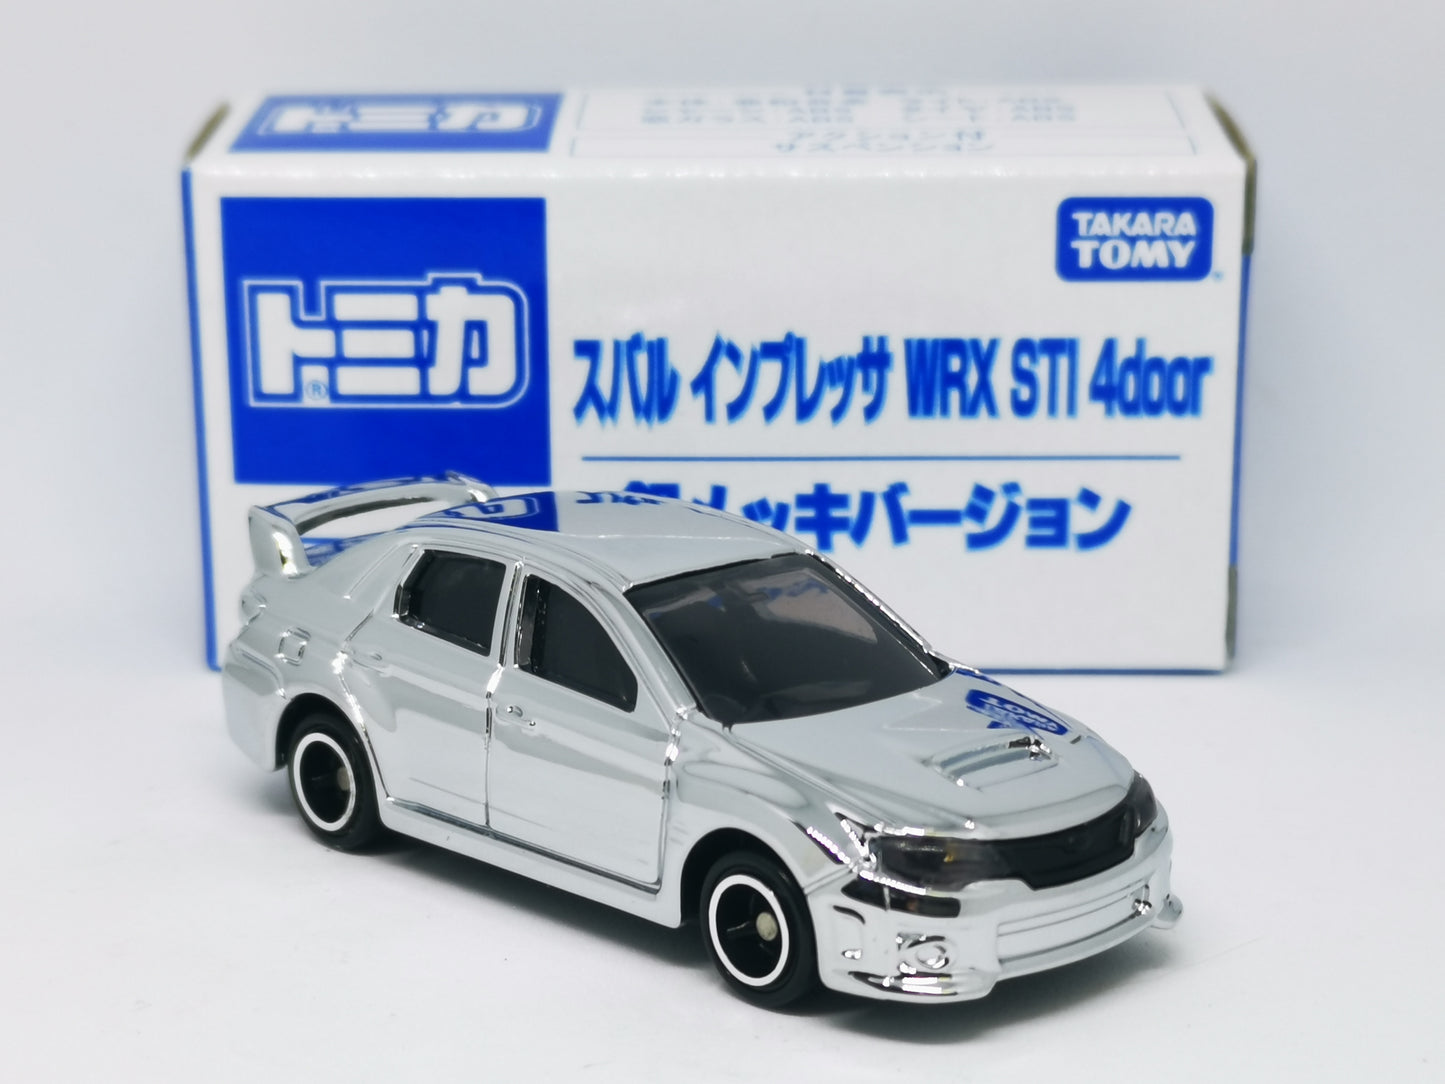 Tomica Expo Exclusive Subaru WRX Sti 4 Door Chrome